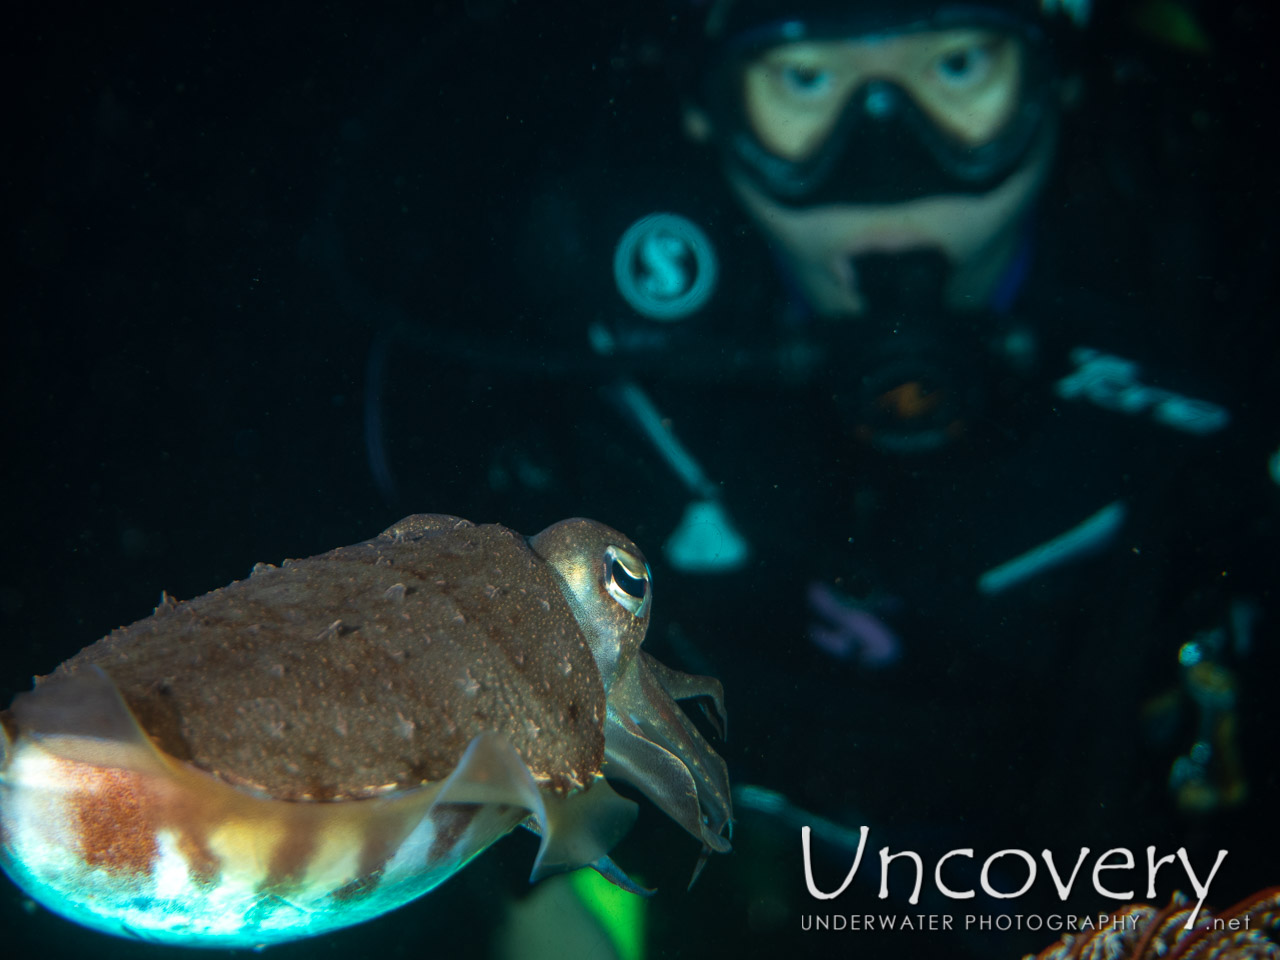 Broadclub Cuttlefish (sepia Latimanus), photo taken in Indonesia, Bali, Tulamben, Pantai Lahar